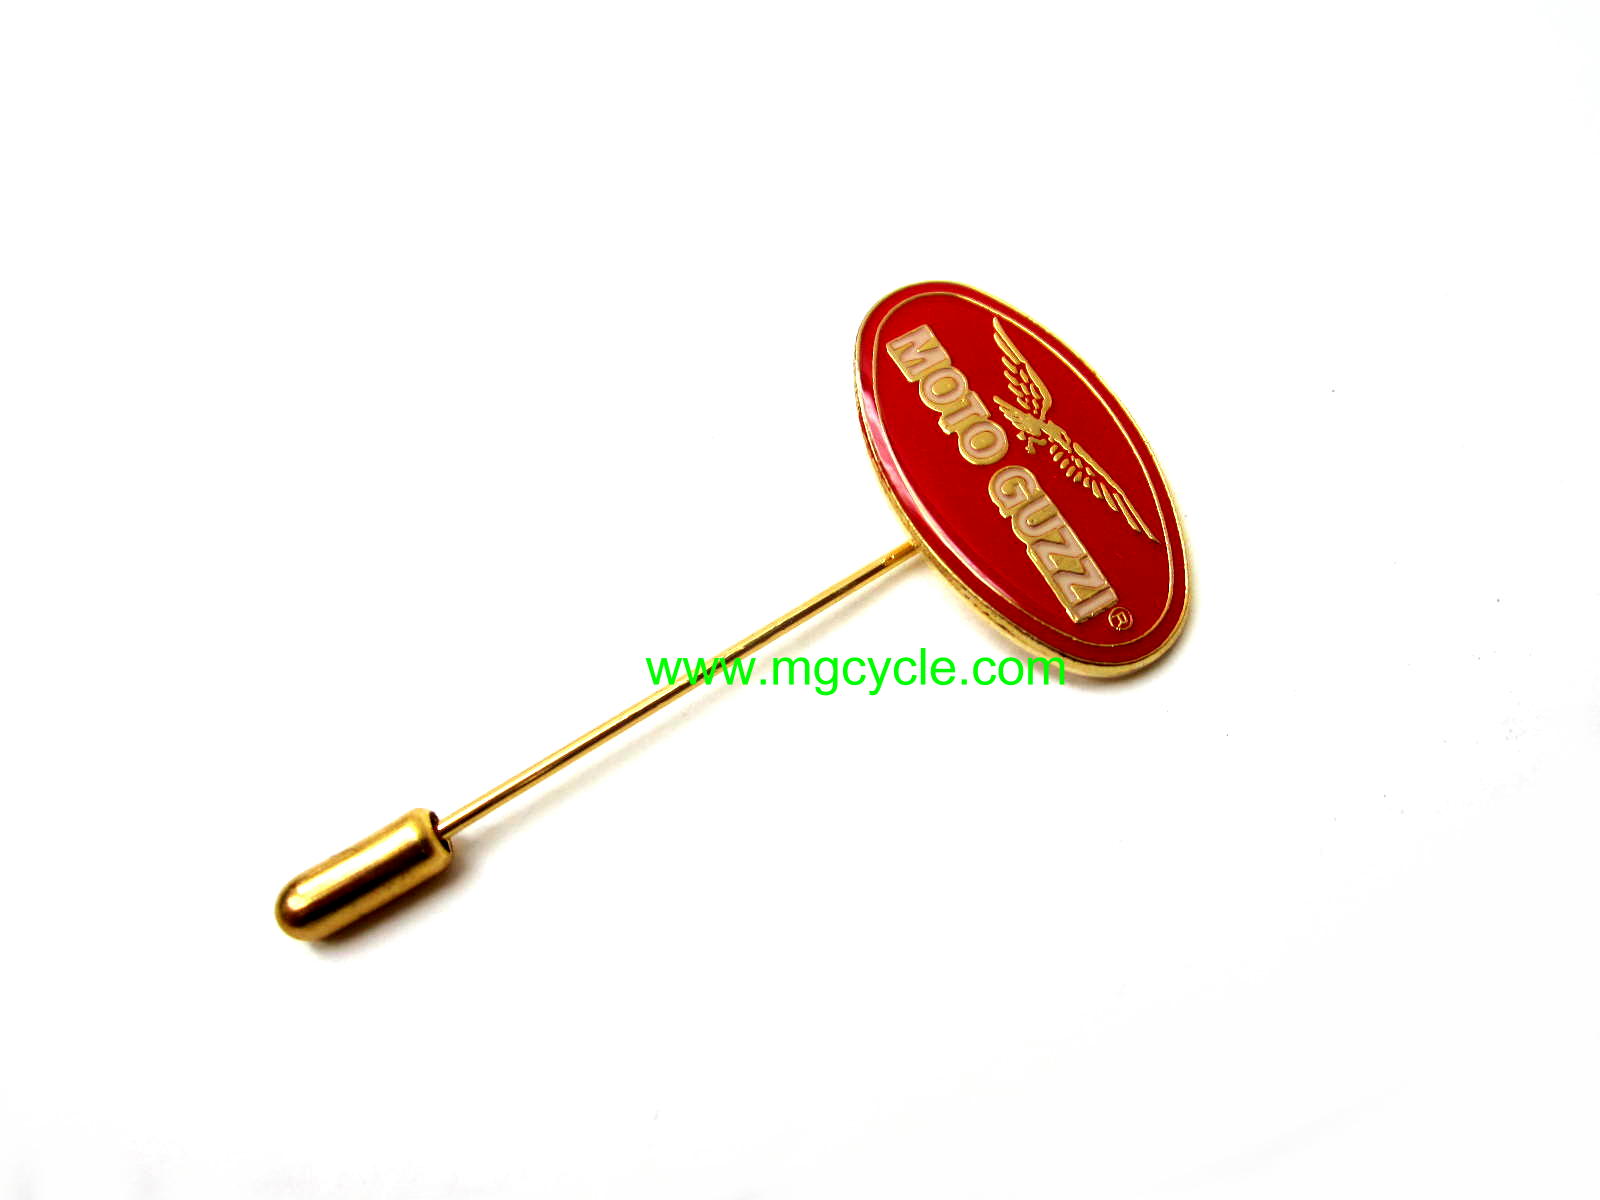 Guzzi oval stick pin, lapel pin, red and white